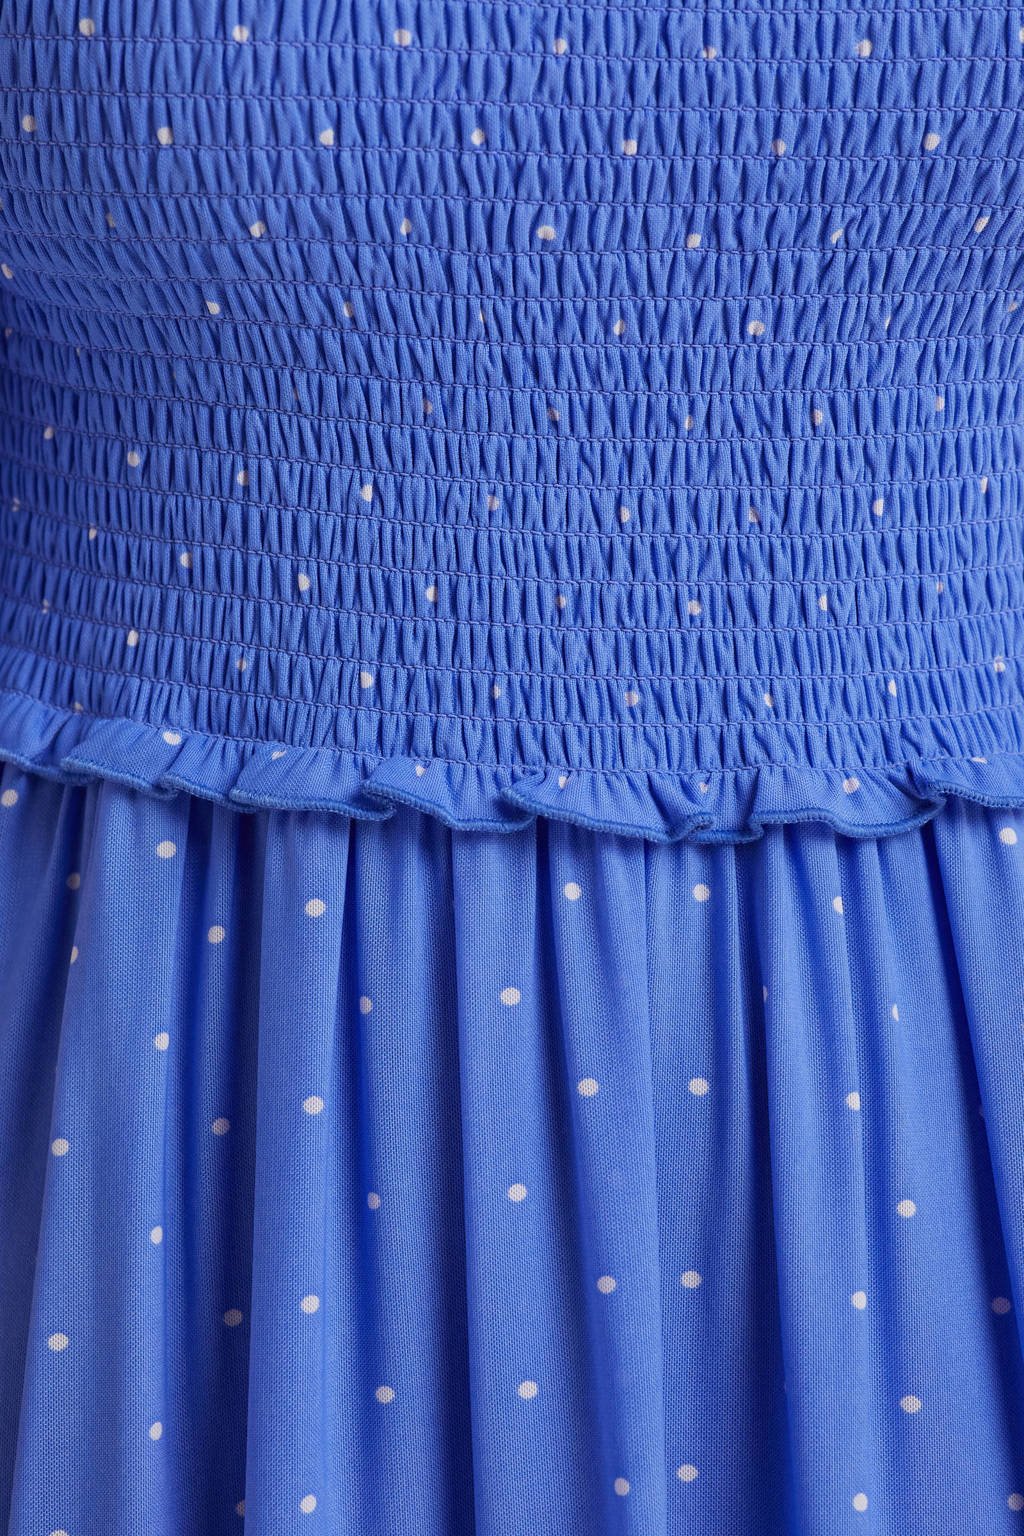 Miljuschka by Wehkamp mesh jurk met en stippenprint blauw wehkamp